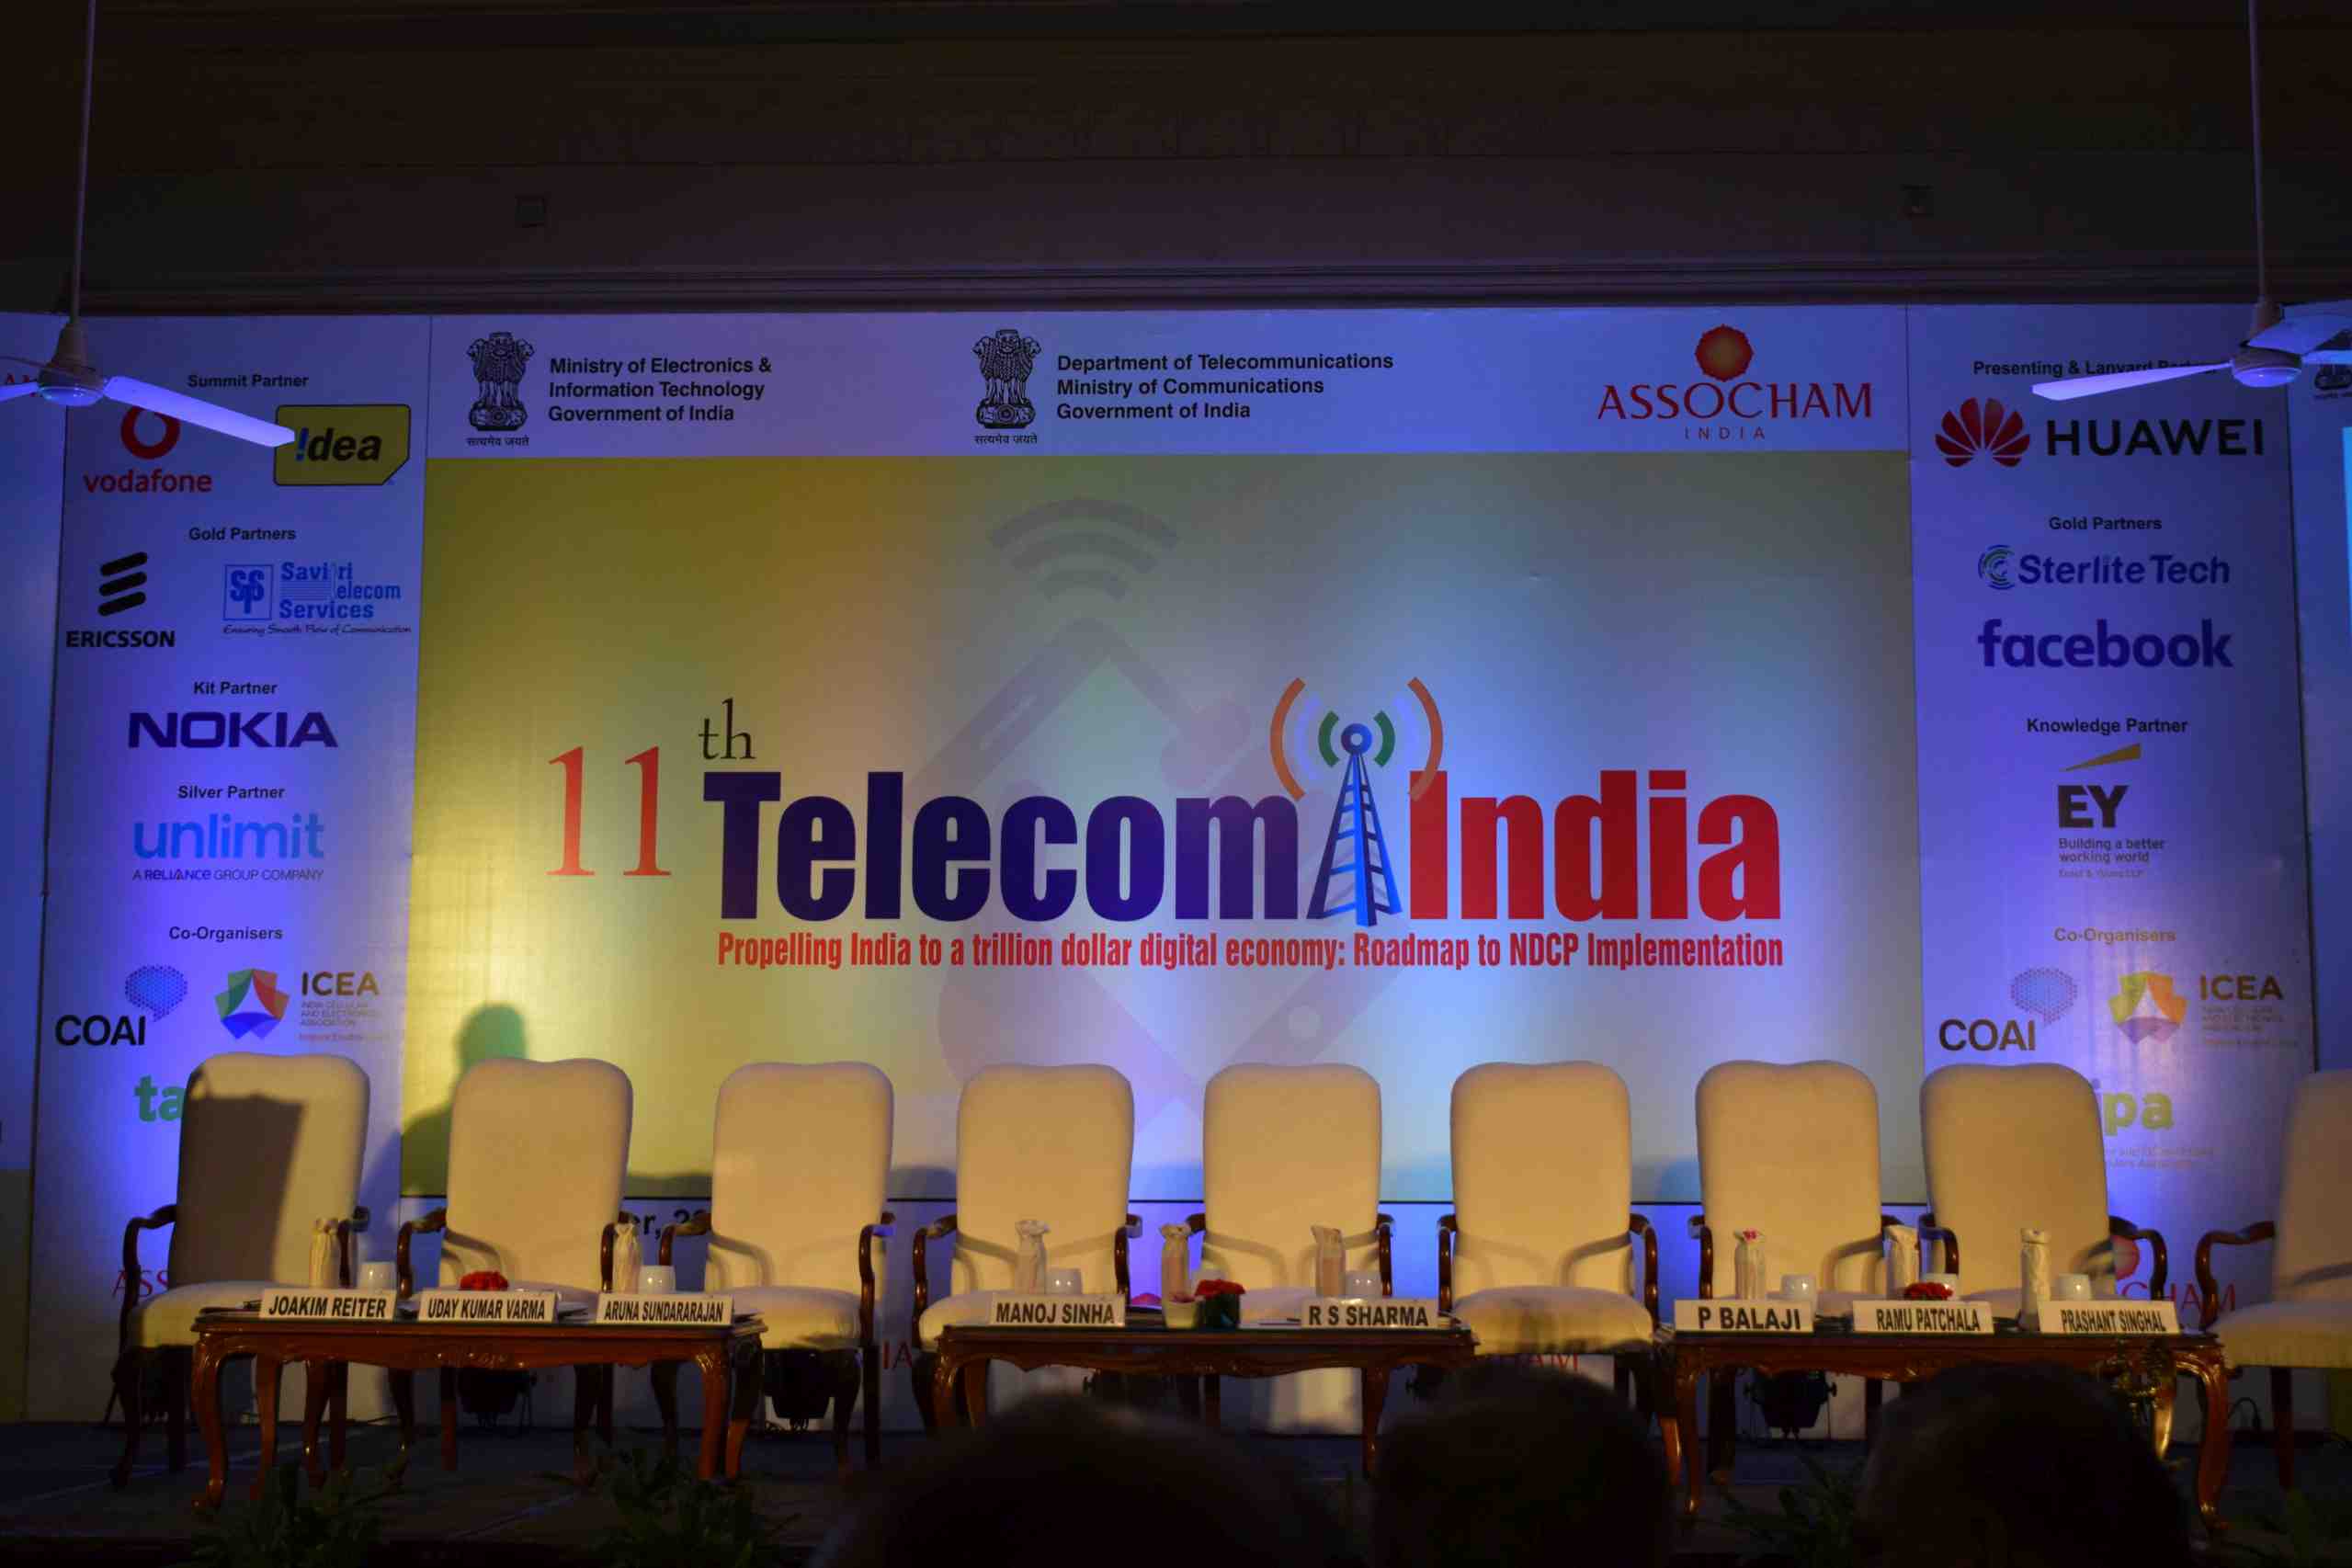 Telecom India 2018 By Assocham